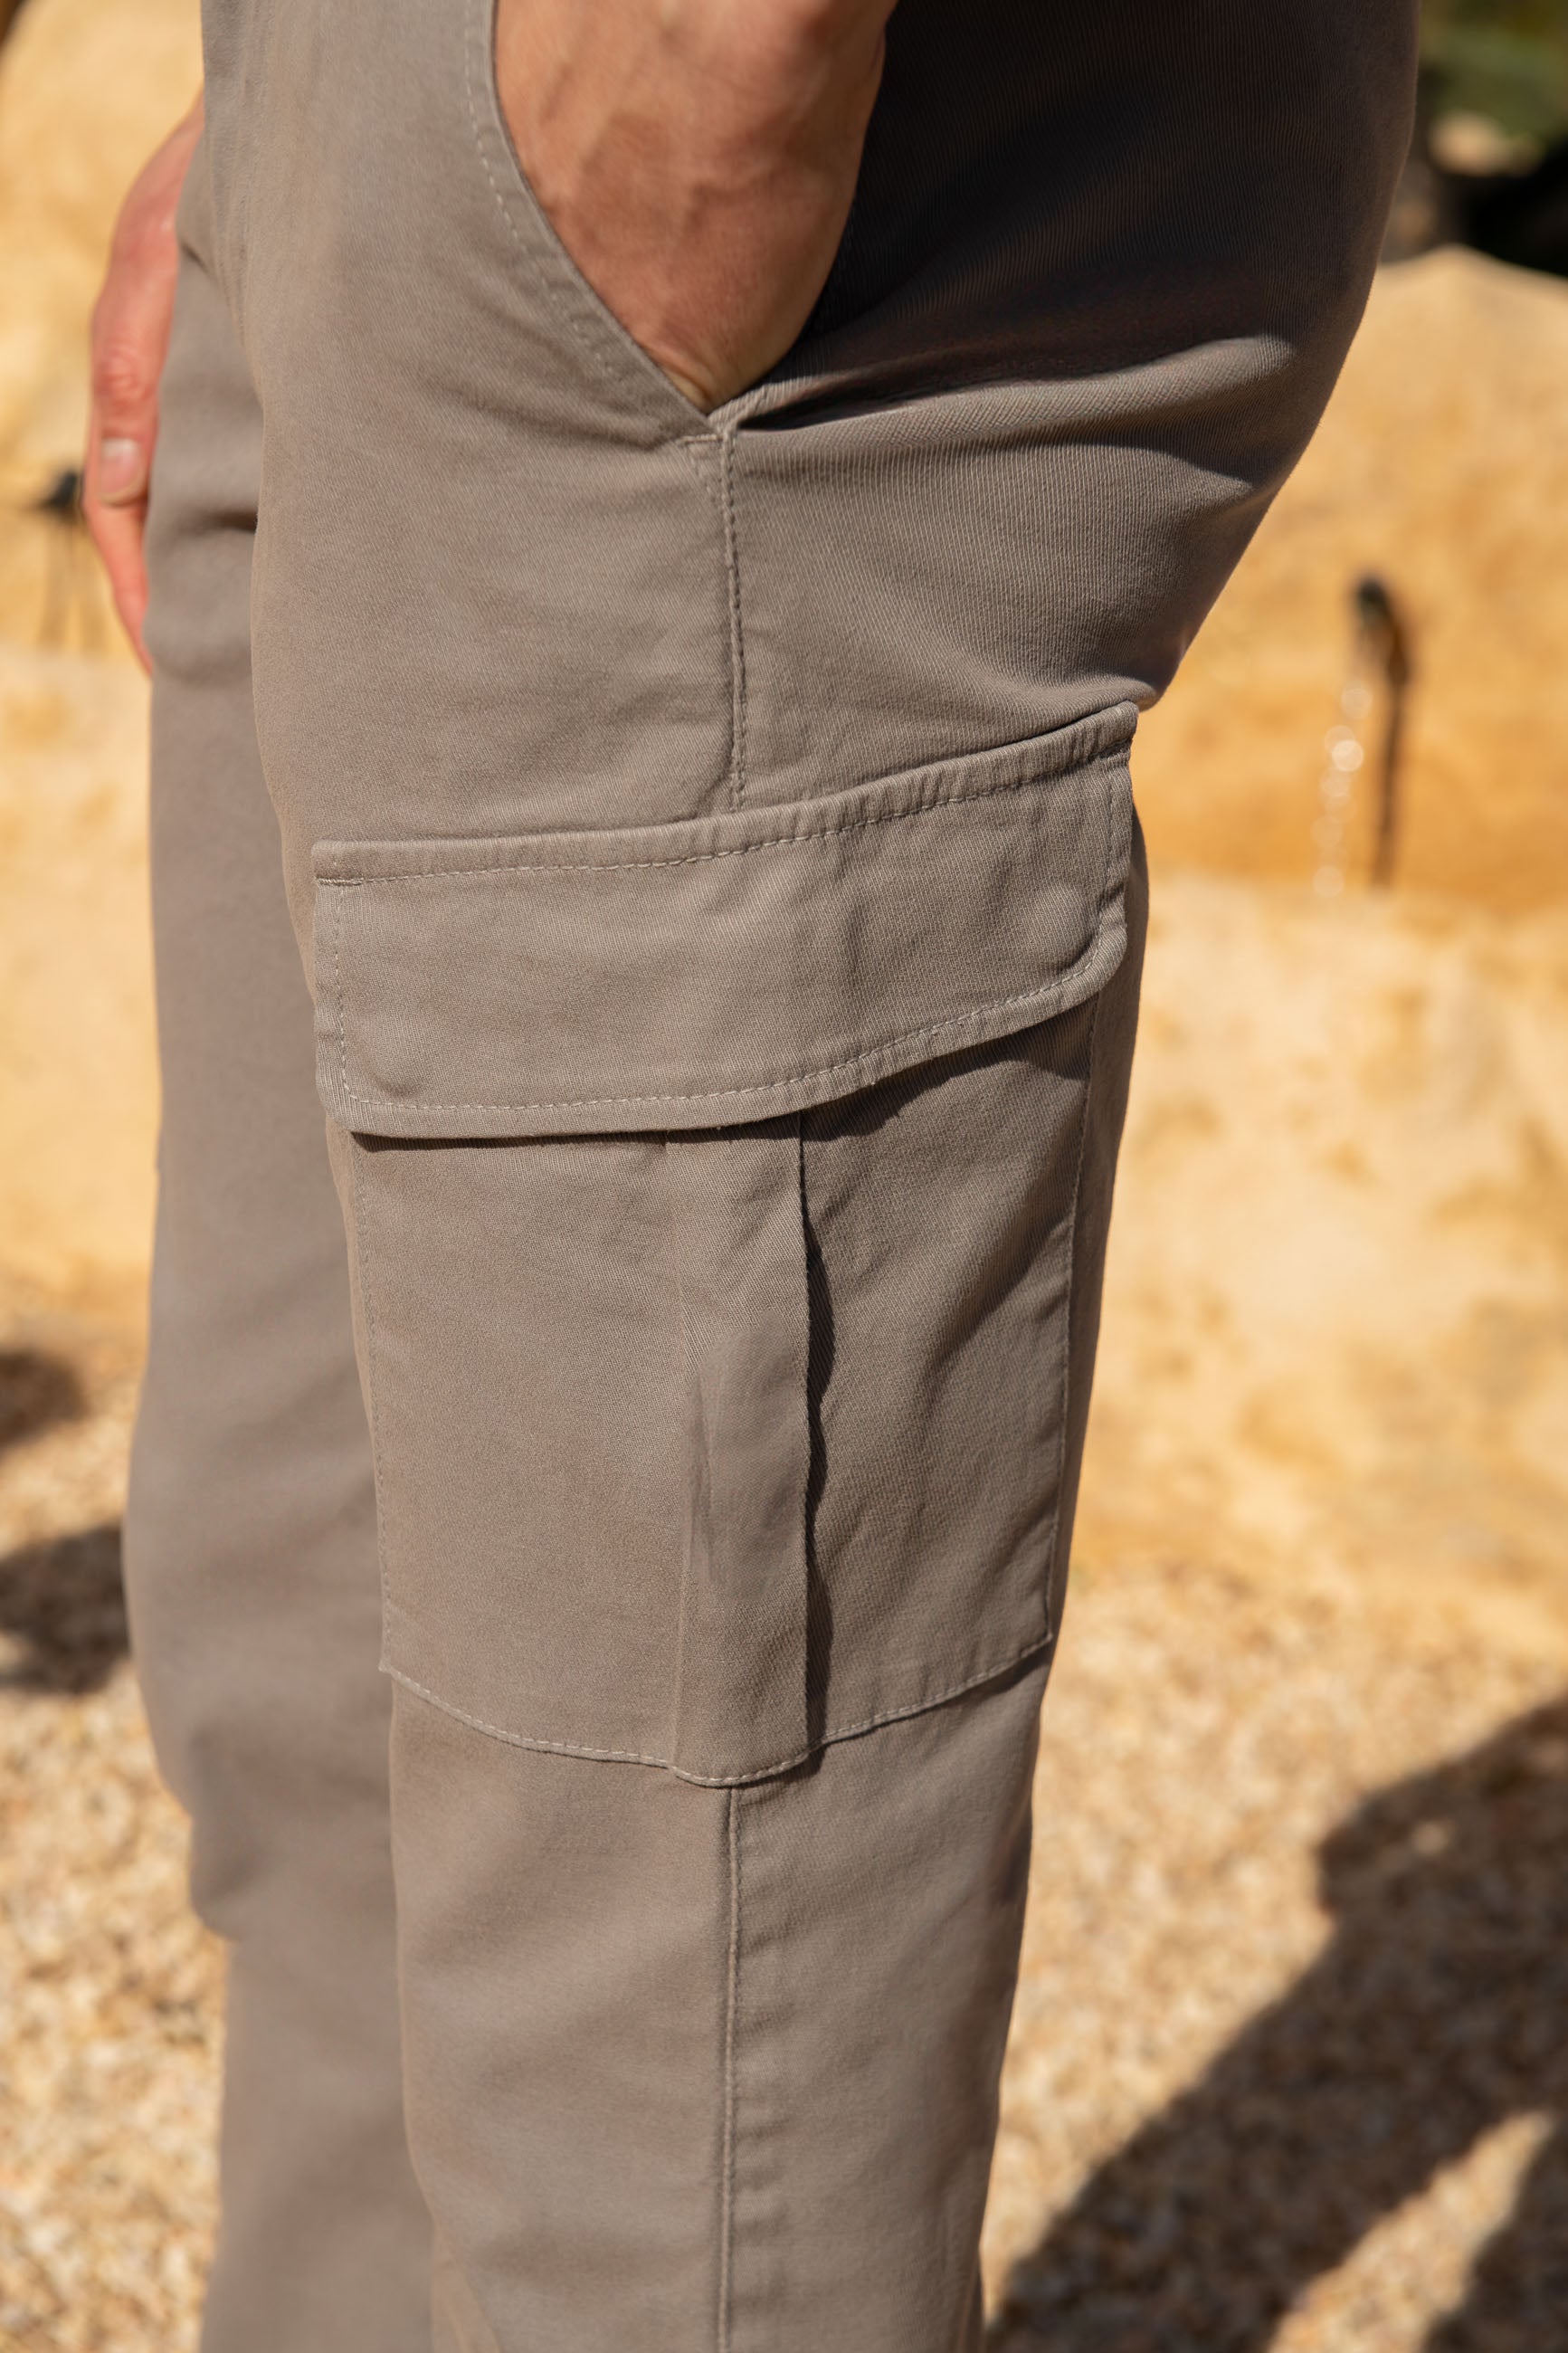 Men Cargo Trousers Pants Army Military Camo Print SG-300 - Island Beige